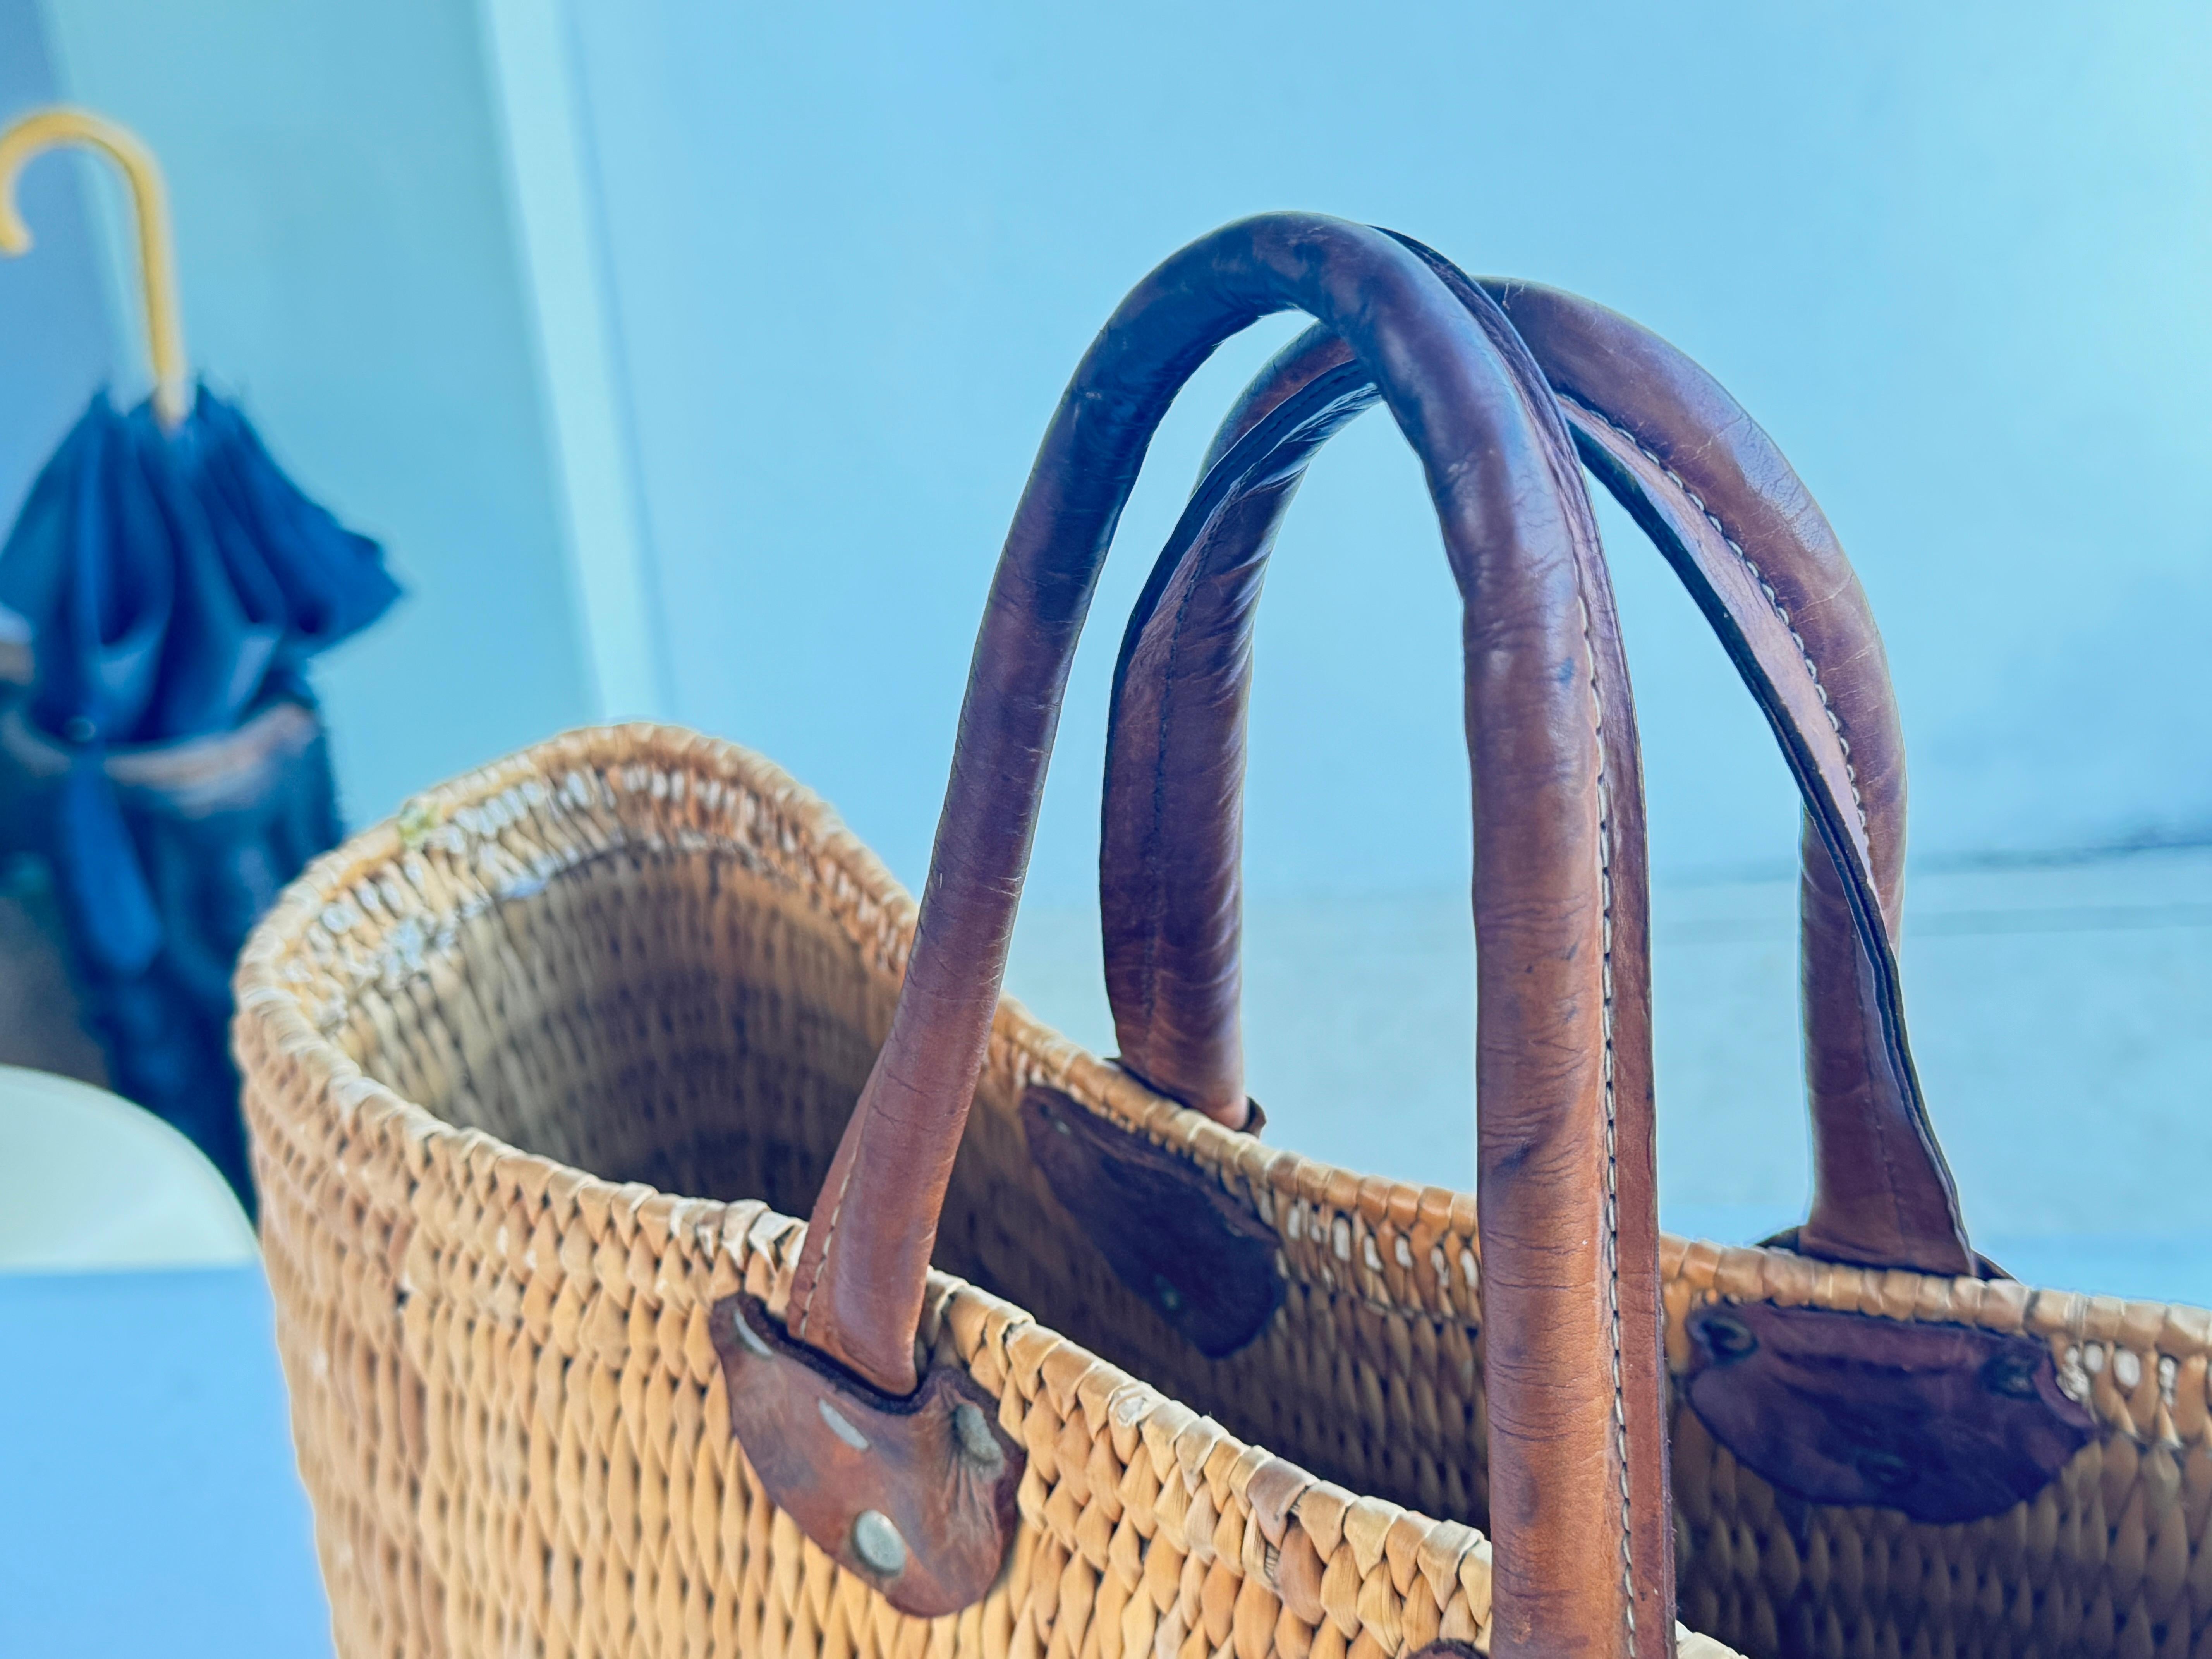 Vintage French Wicker Basket, Gold Color Stitched Leather Bag Handles France For Sale 1